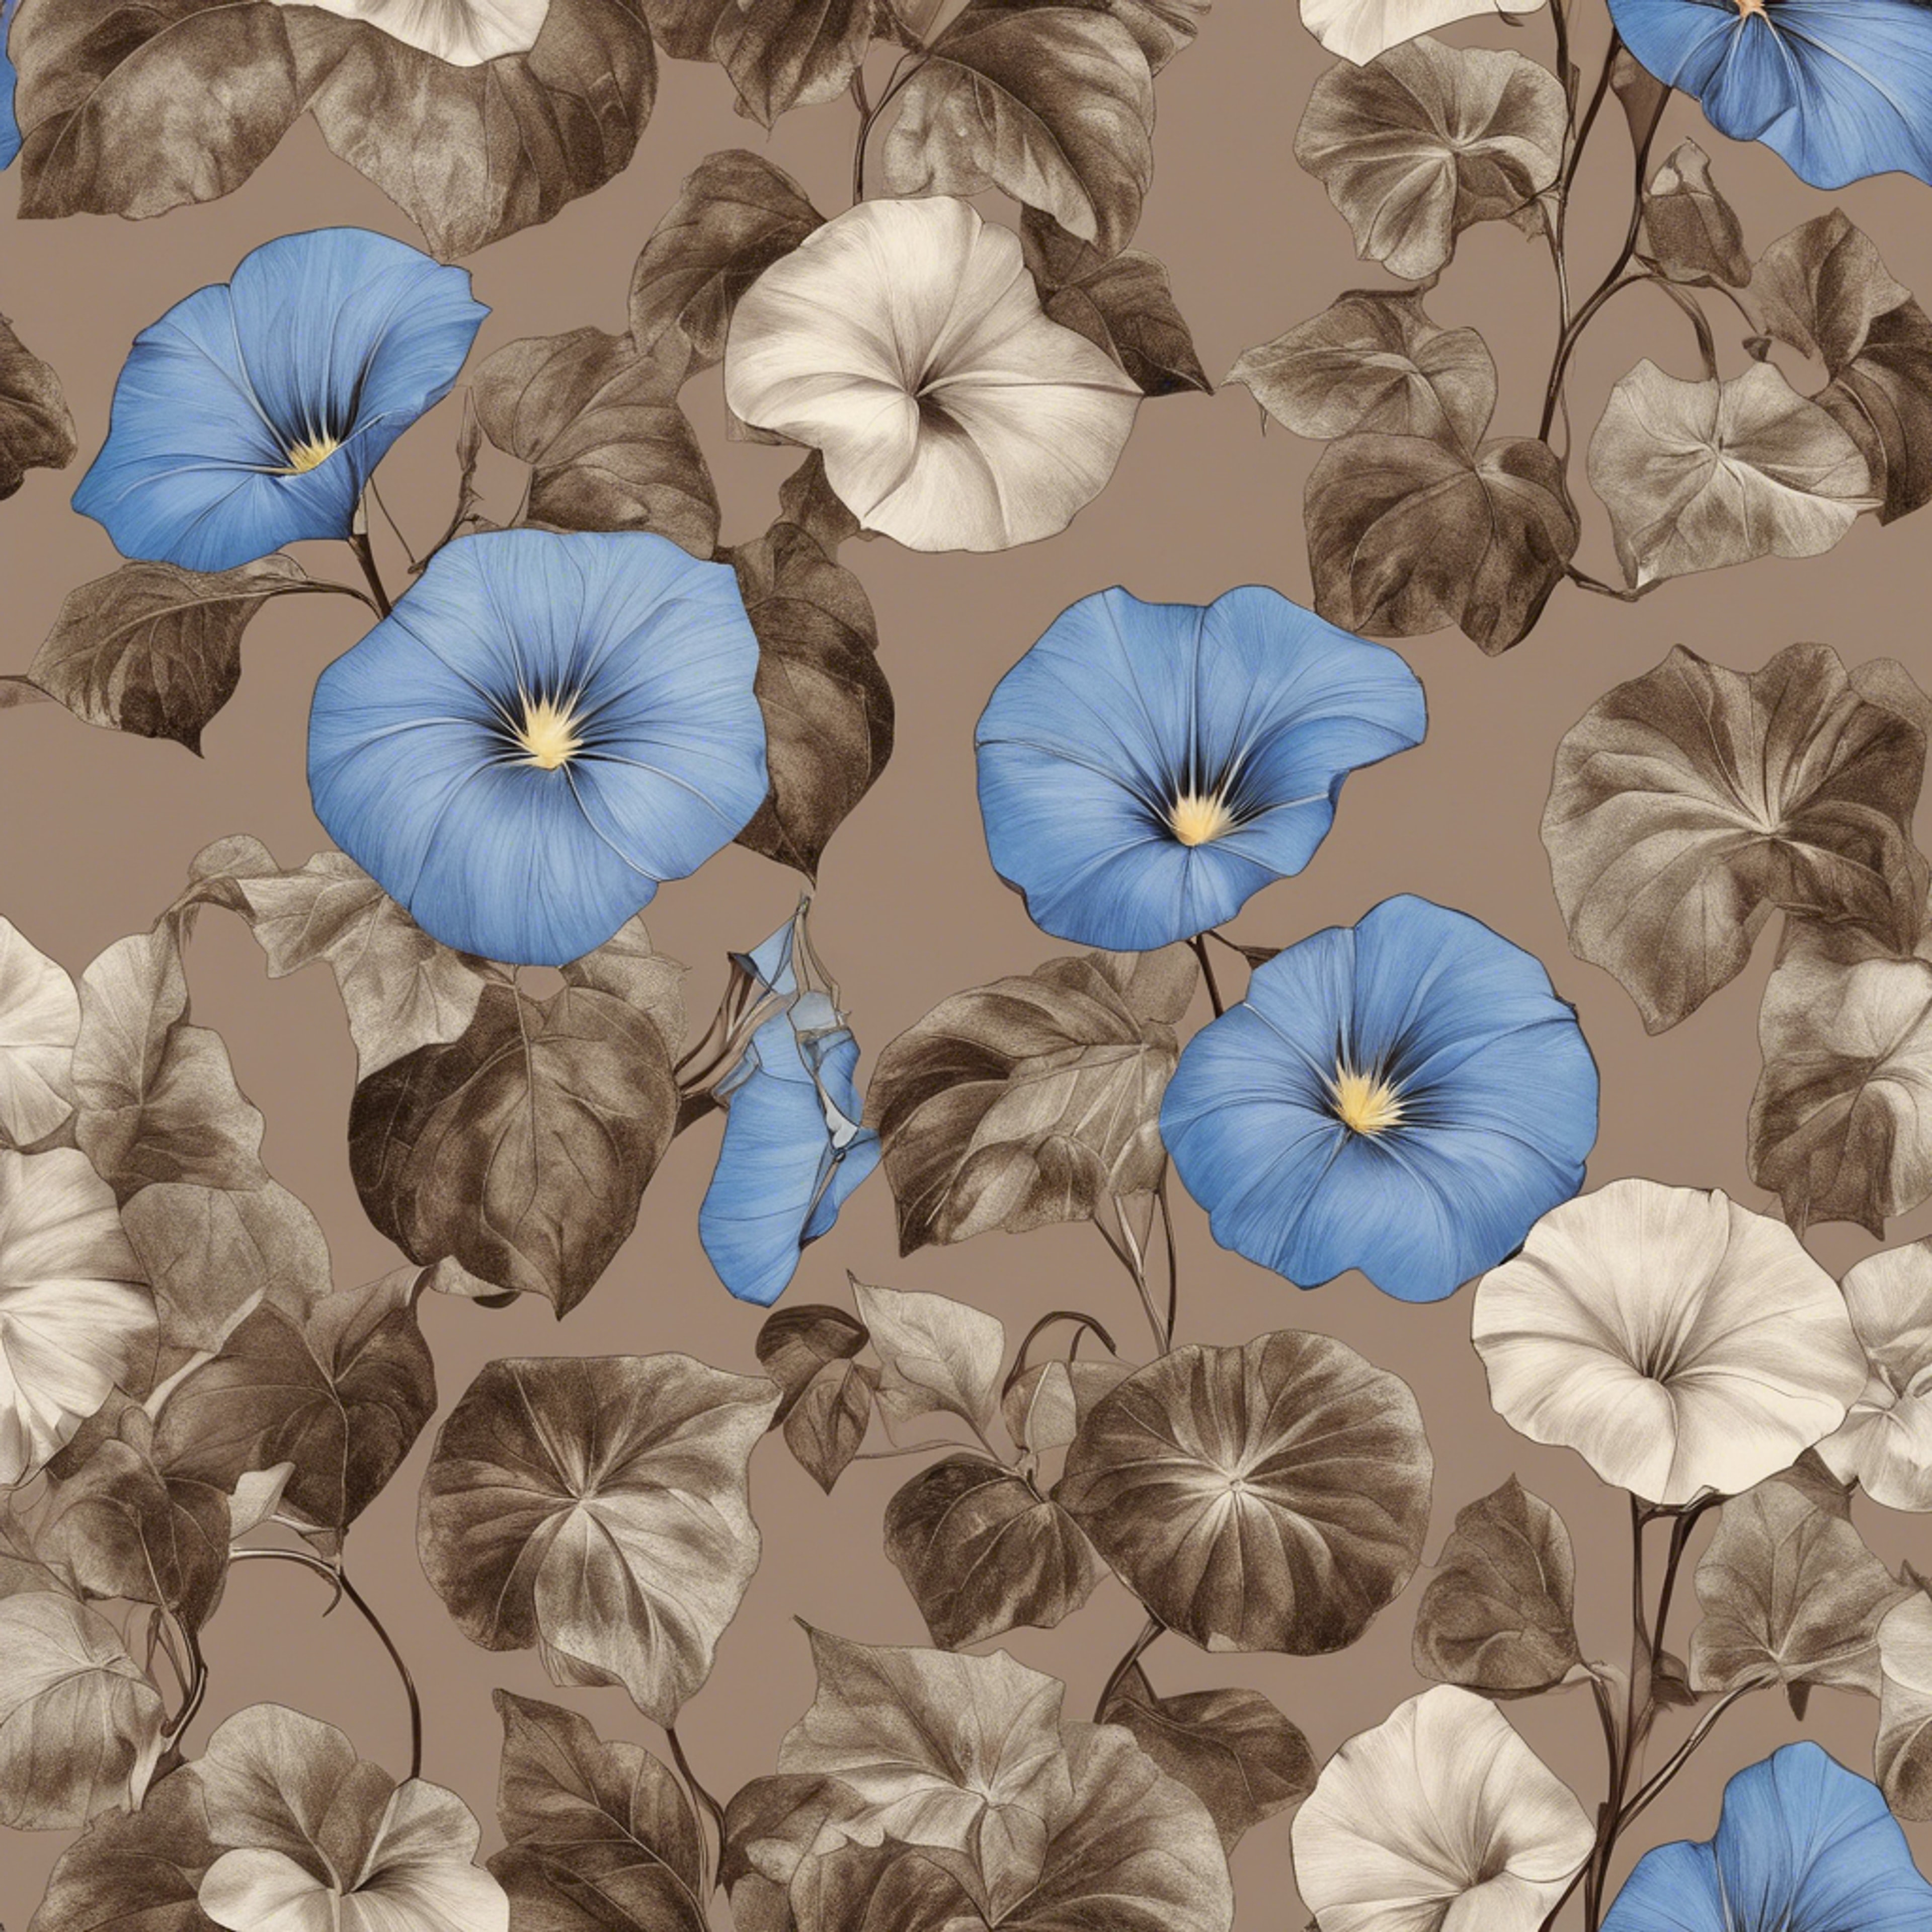 Vintage wallpaper design of nostalgic blue morning glories against a coffee brown backdrop. Wallpaper[8d5b0df35da548e6bc5c]